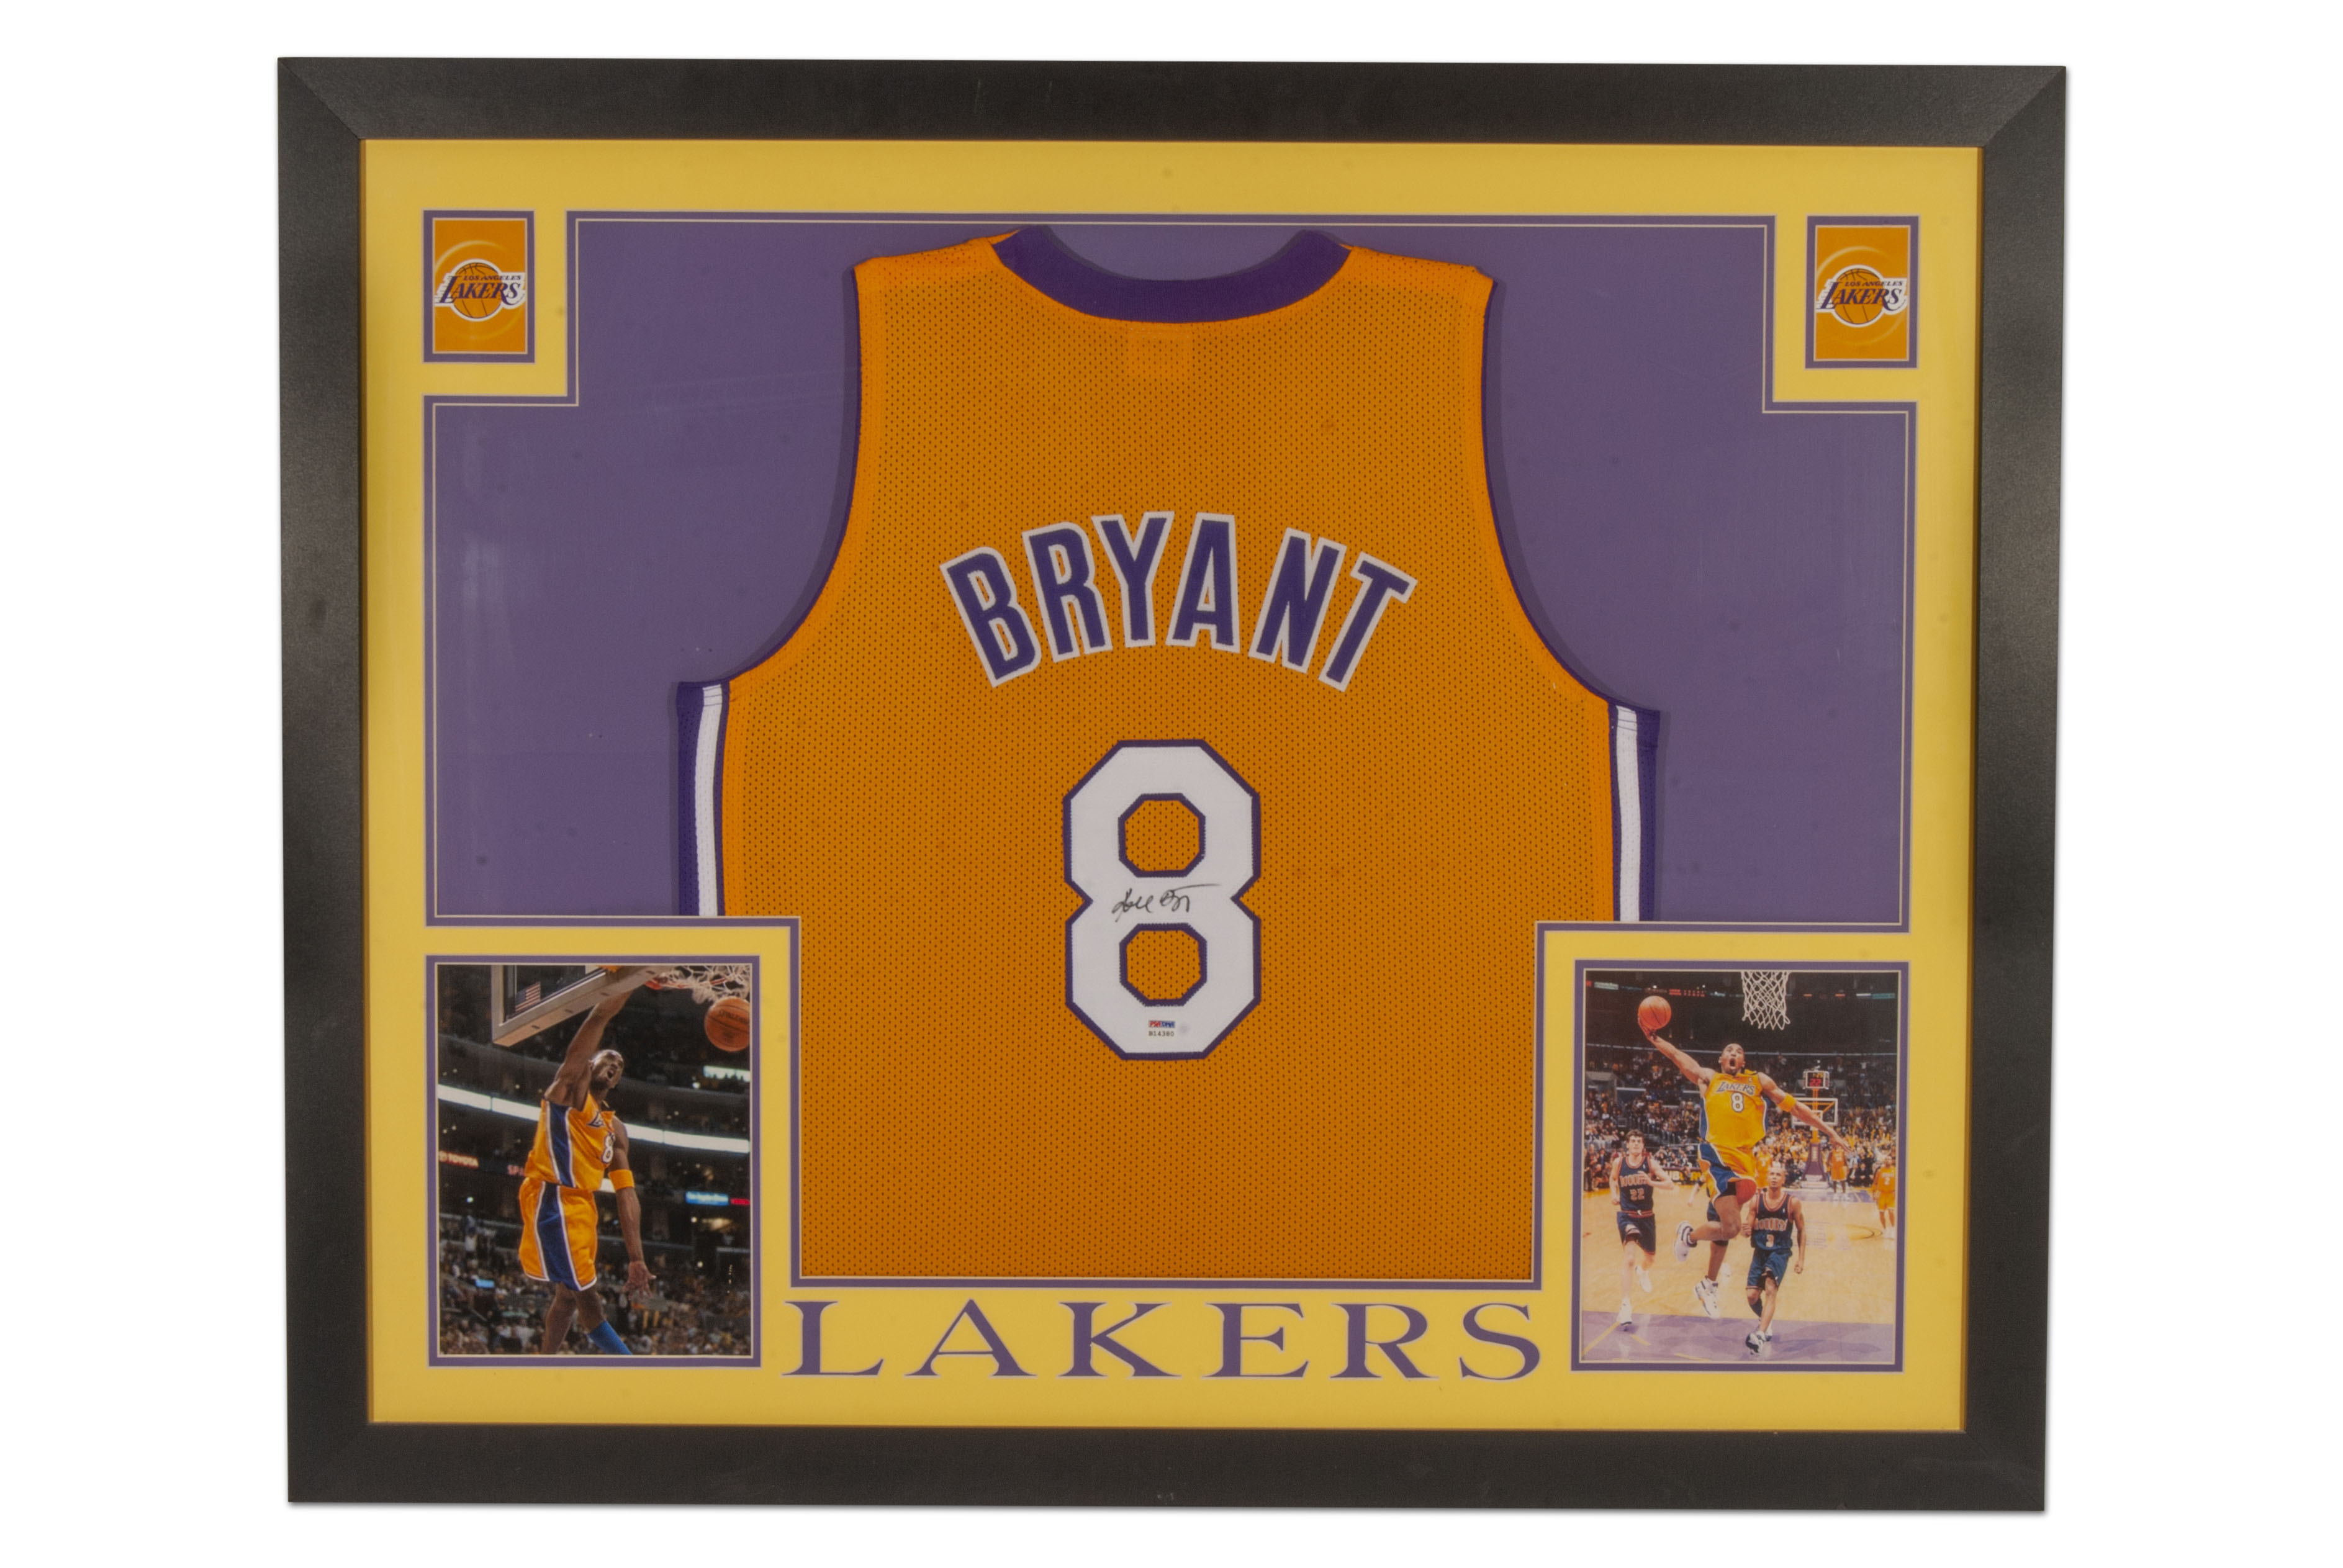 Sold at Auction: Kobe Bryant Signed Jersey Framed (PSA COA)